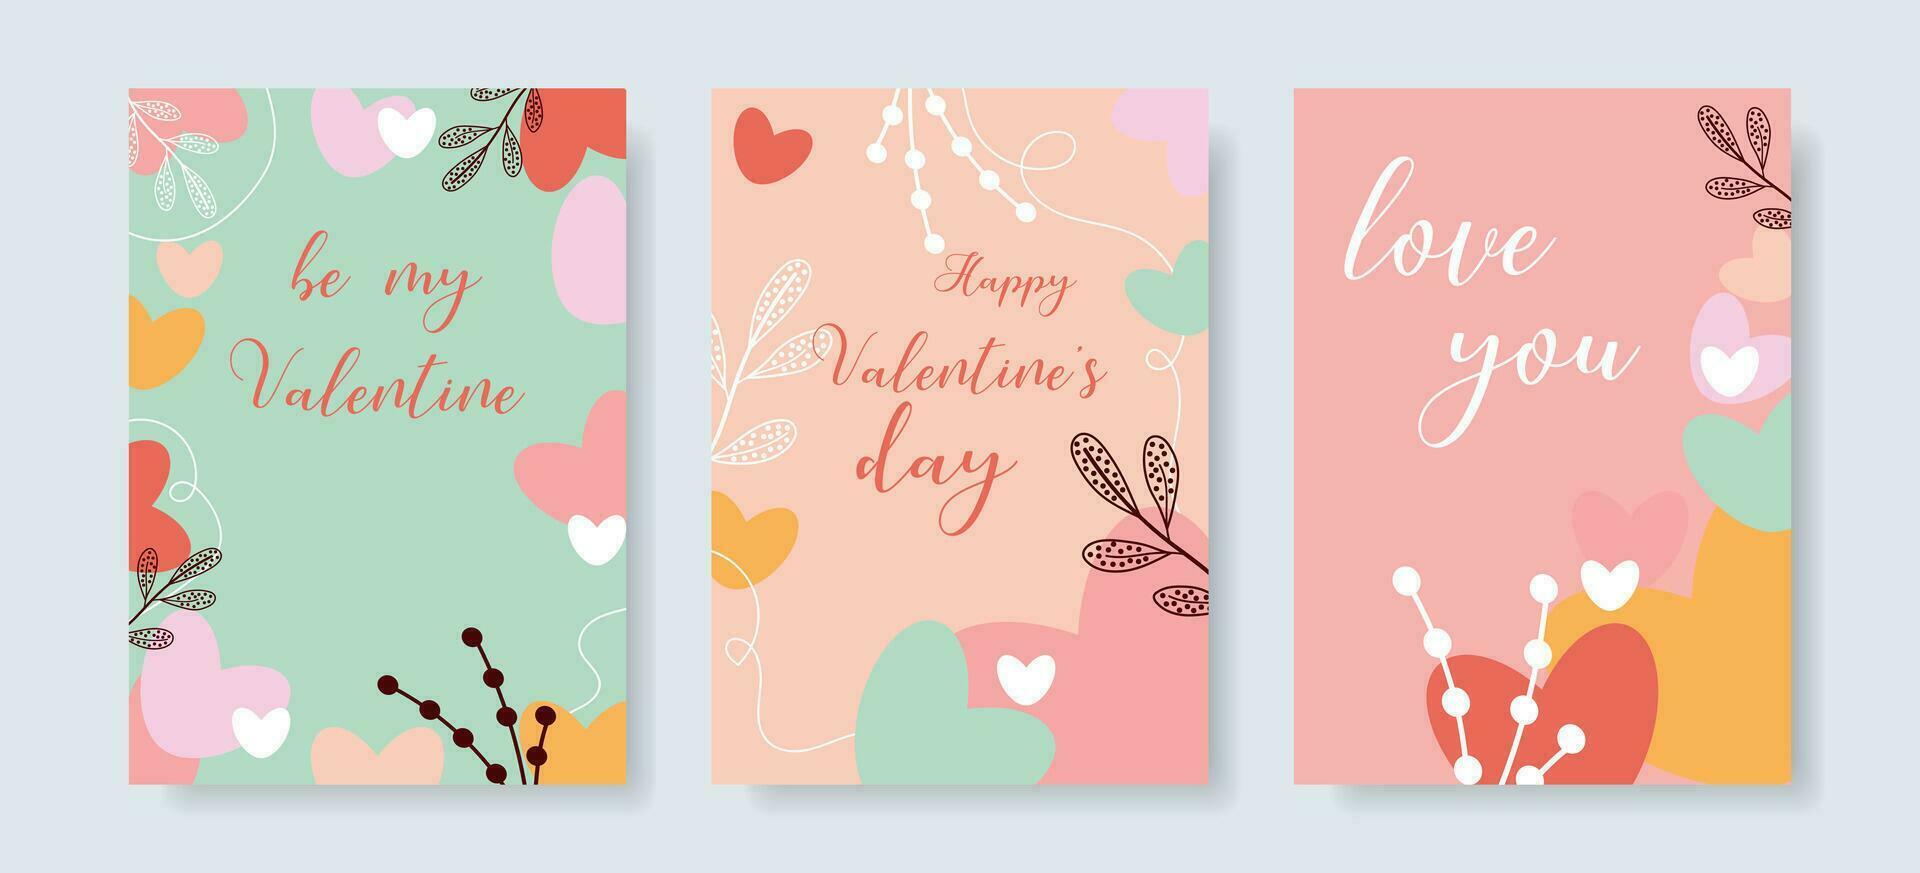 colección de san valentin contento San Valentín día. bandera, tarjeta postal para San Valentín día. vector